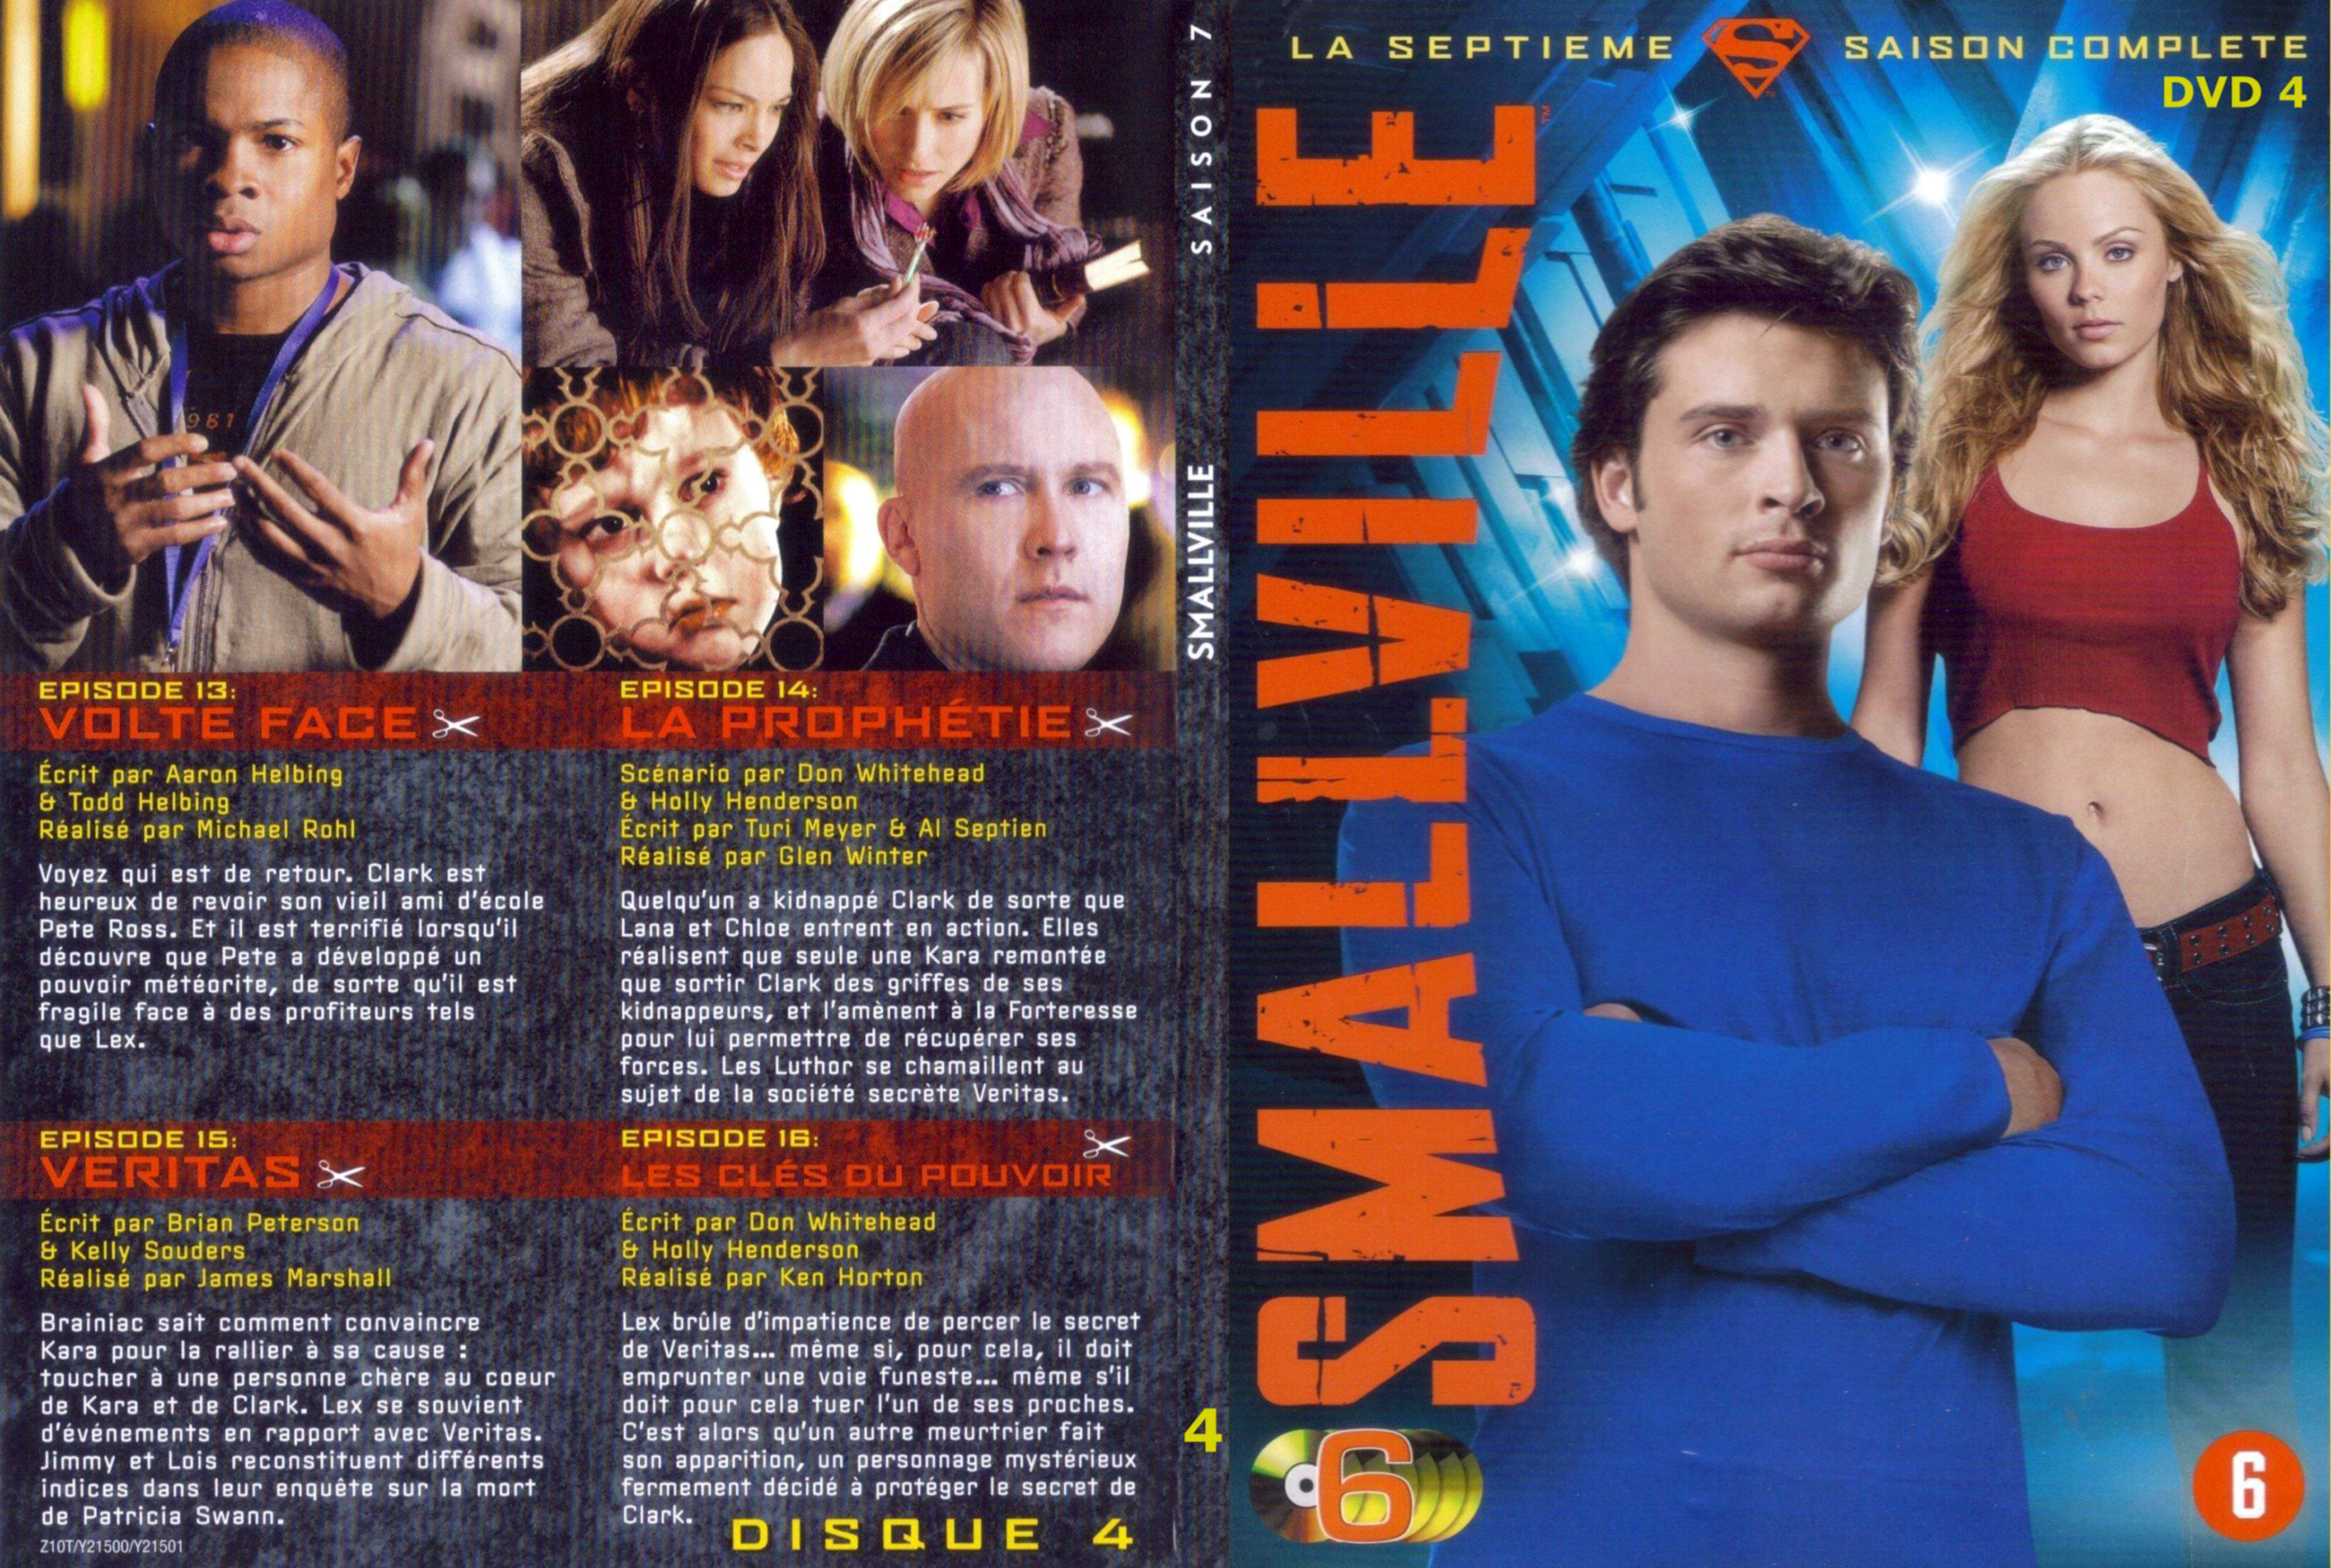 Jaquette DVD Smallville saison 7 DVD 4